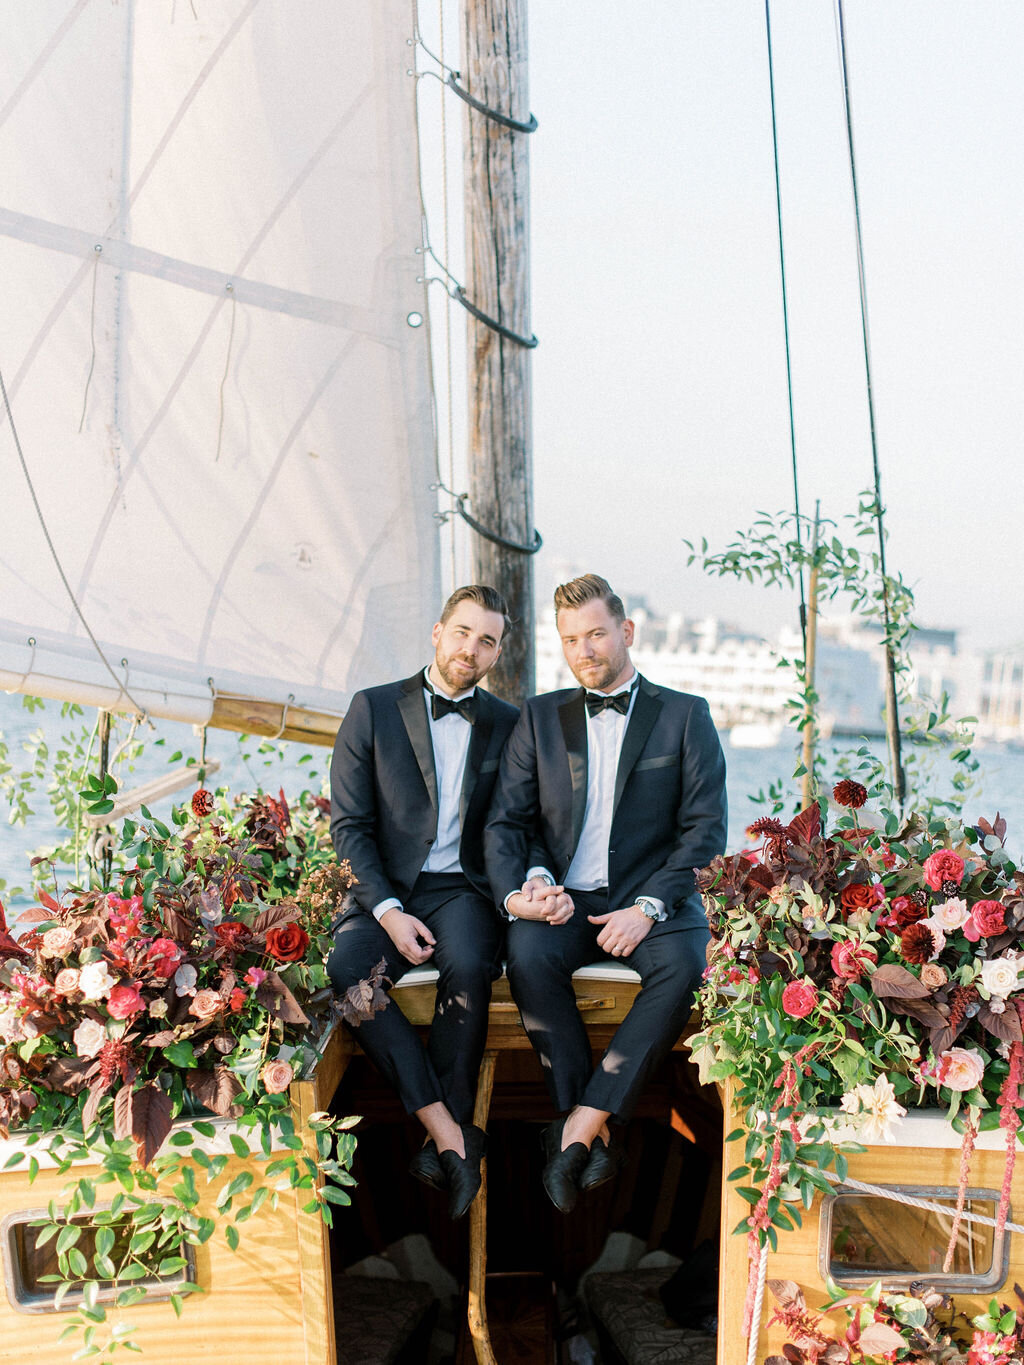 Kate-Murtaugh-Events-Boston-Harbor-sail-boat-yacht-elopement-wedding-planner-grooms-florals-greenery-installation